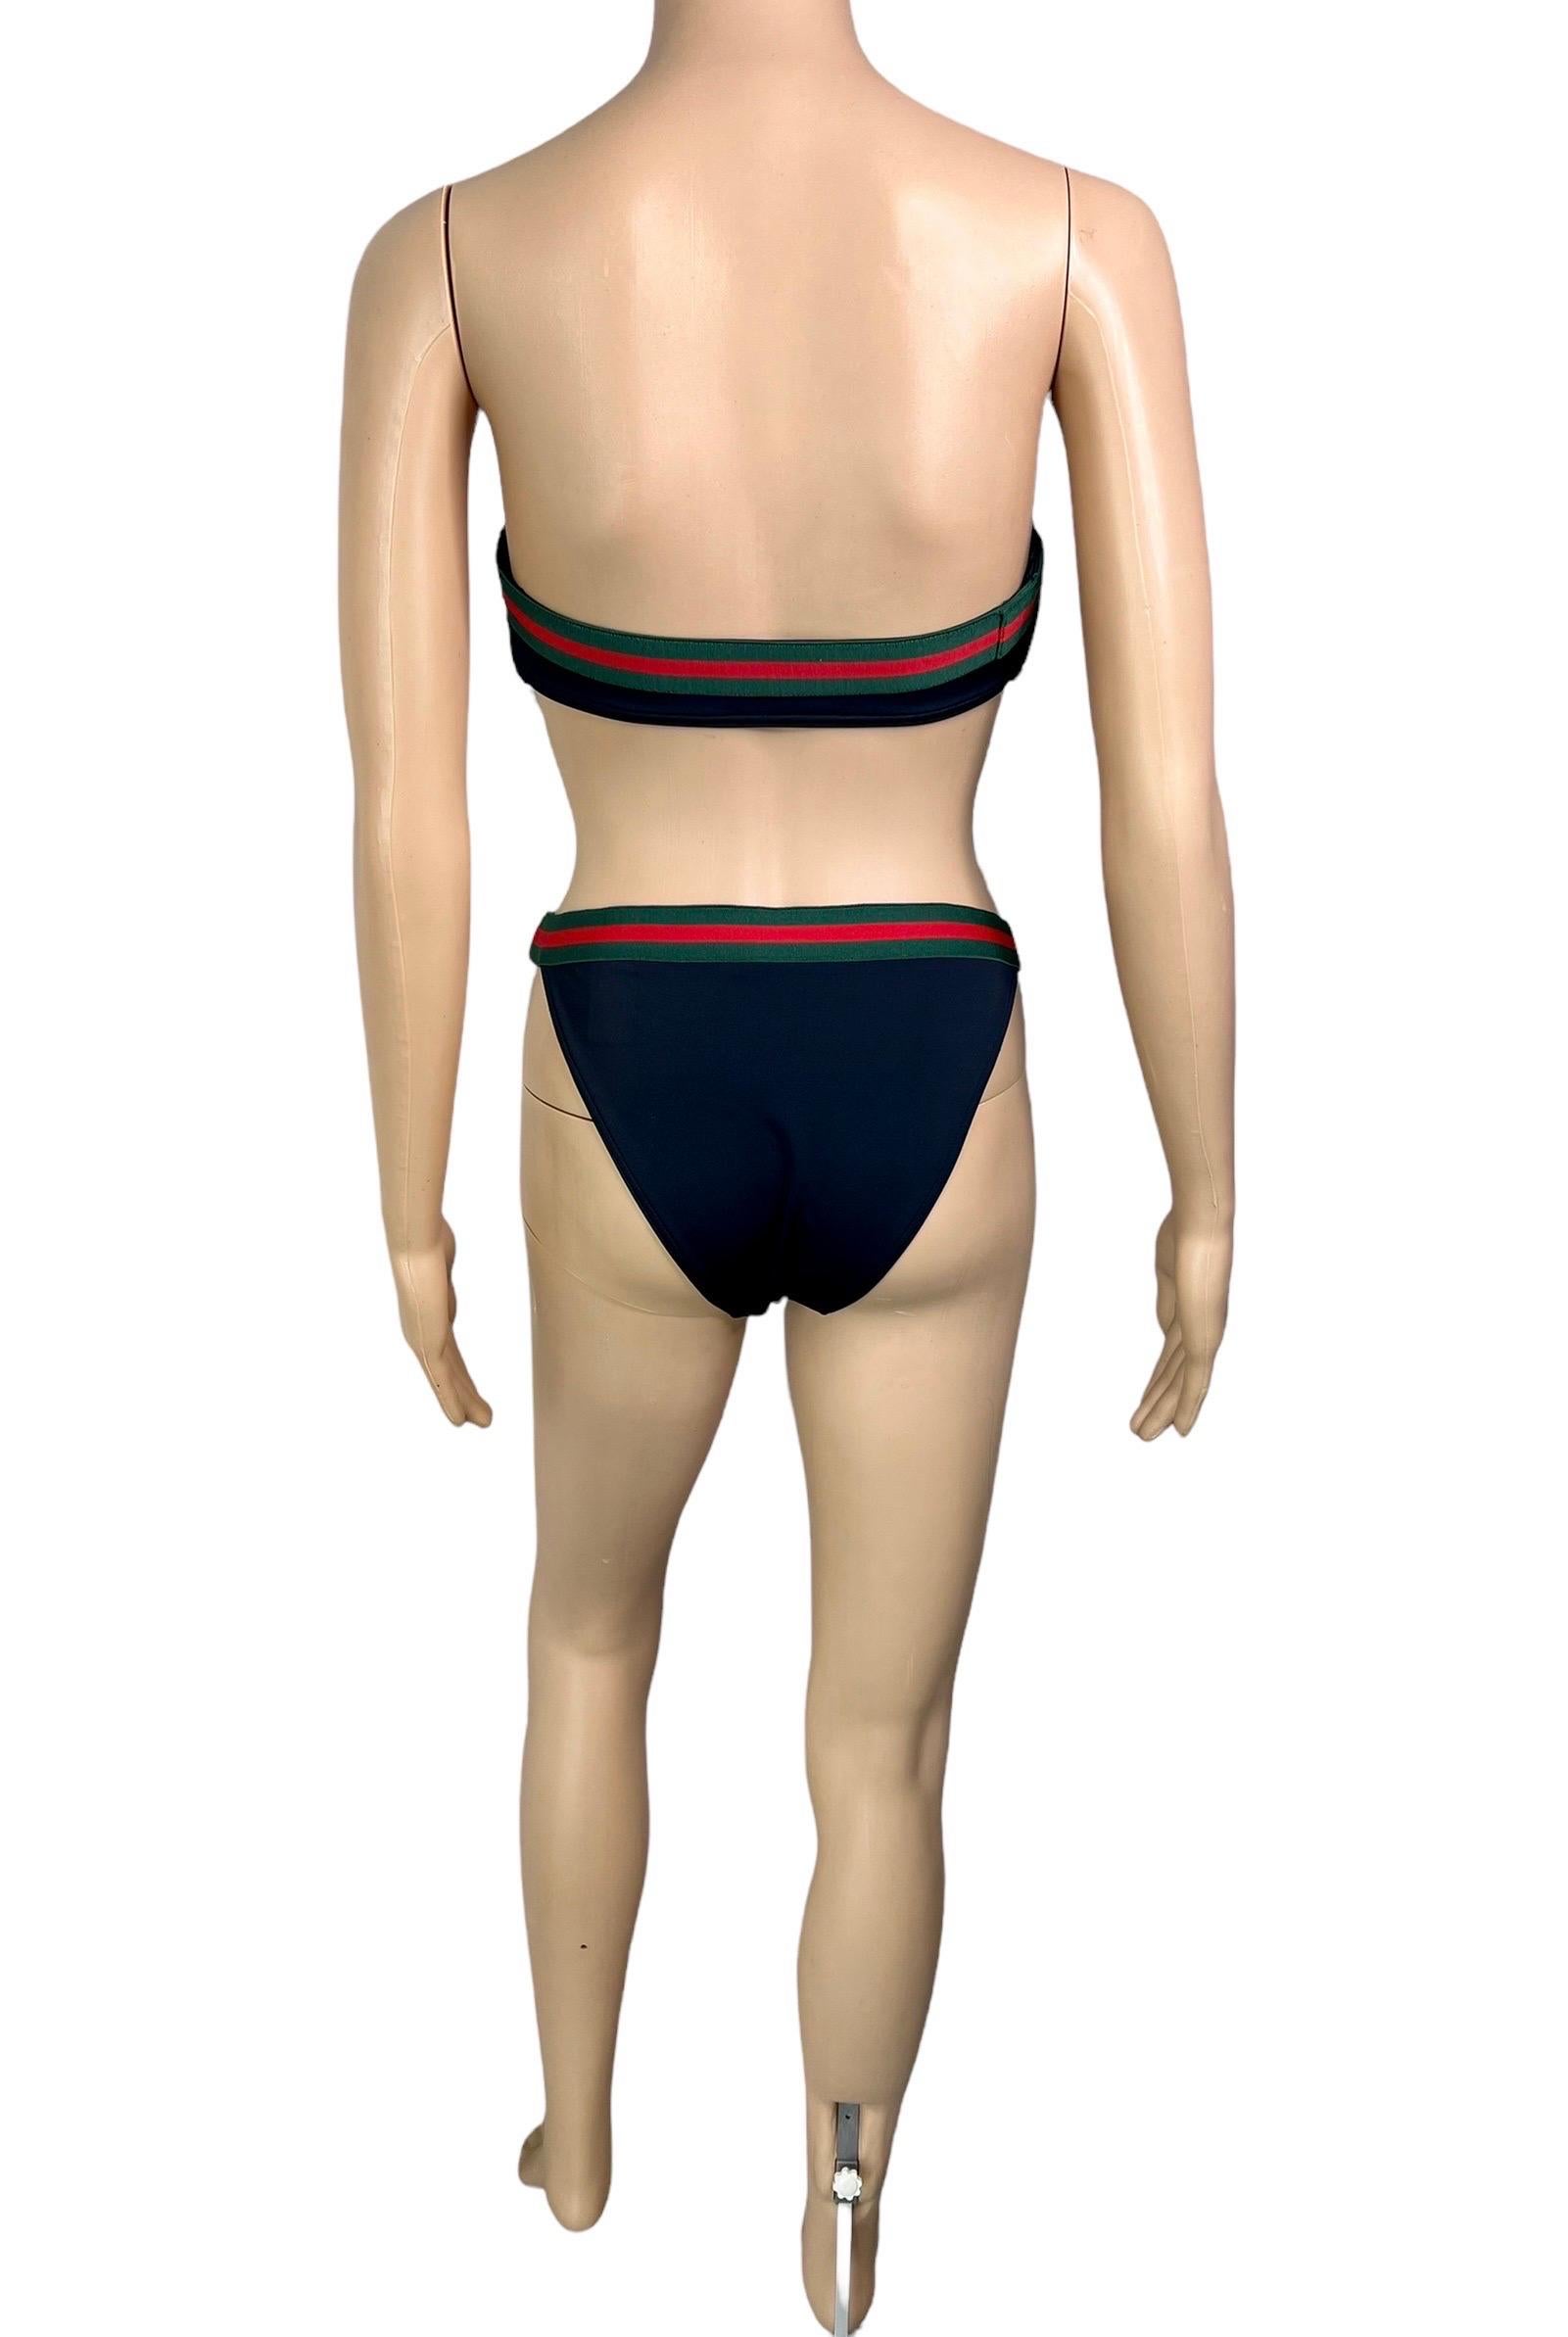 Tom Ford for Gucci S/S 1999 Strapless Bra & Bikini Two-Piece Swimwear Swimsuit For Sale 2